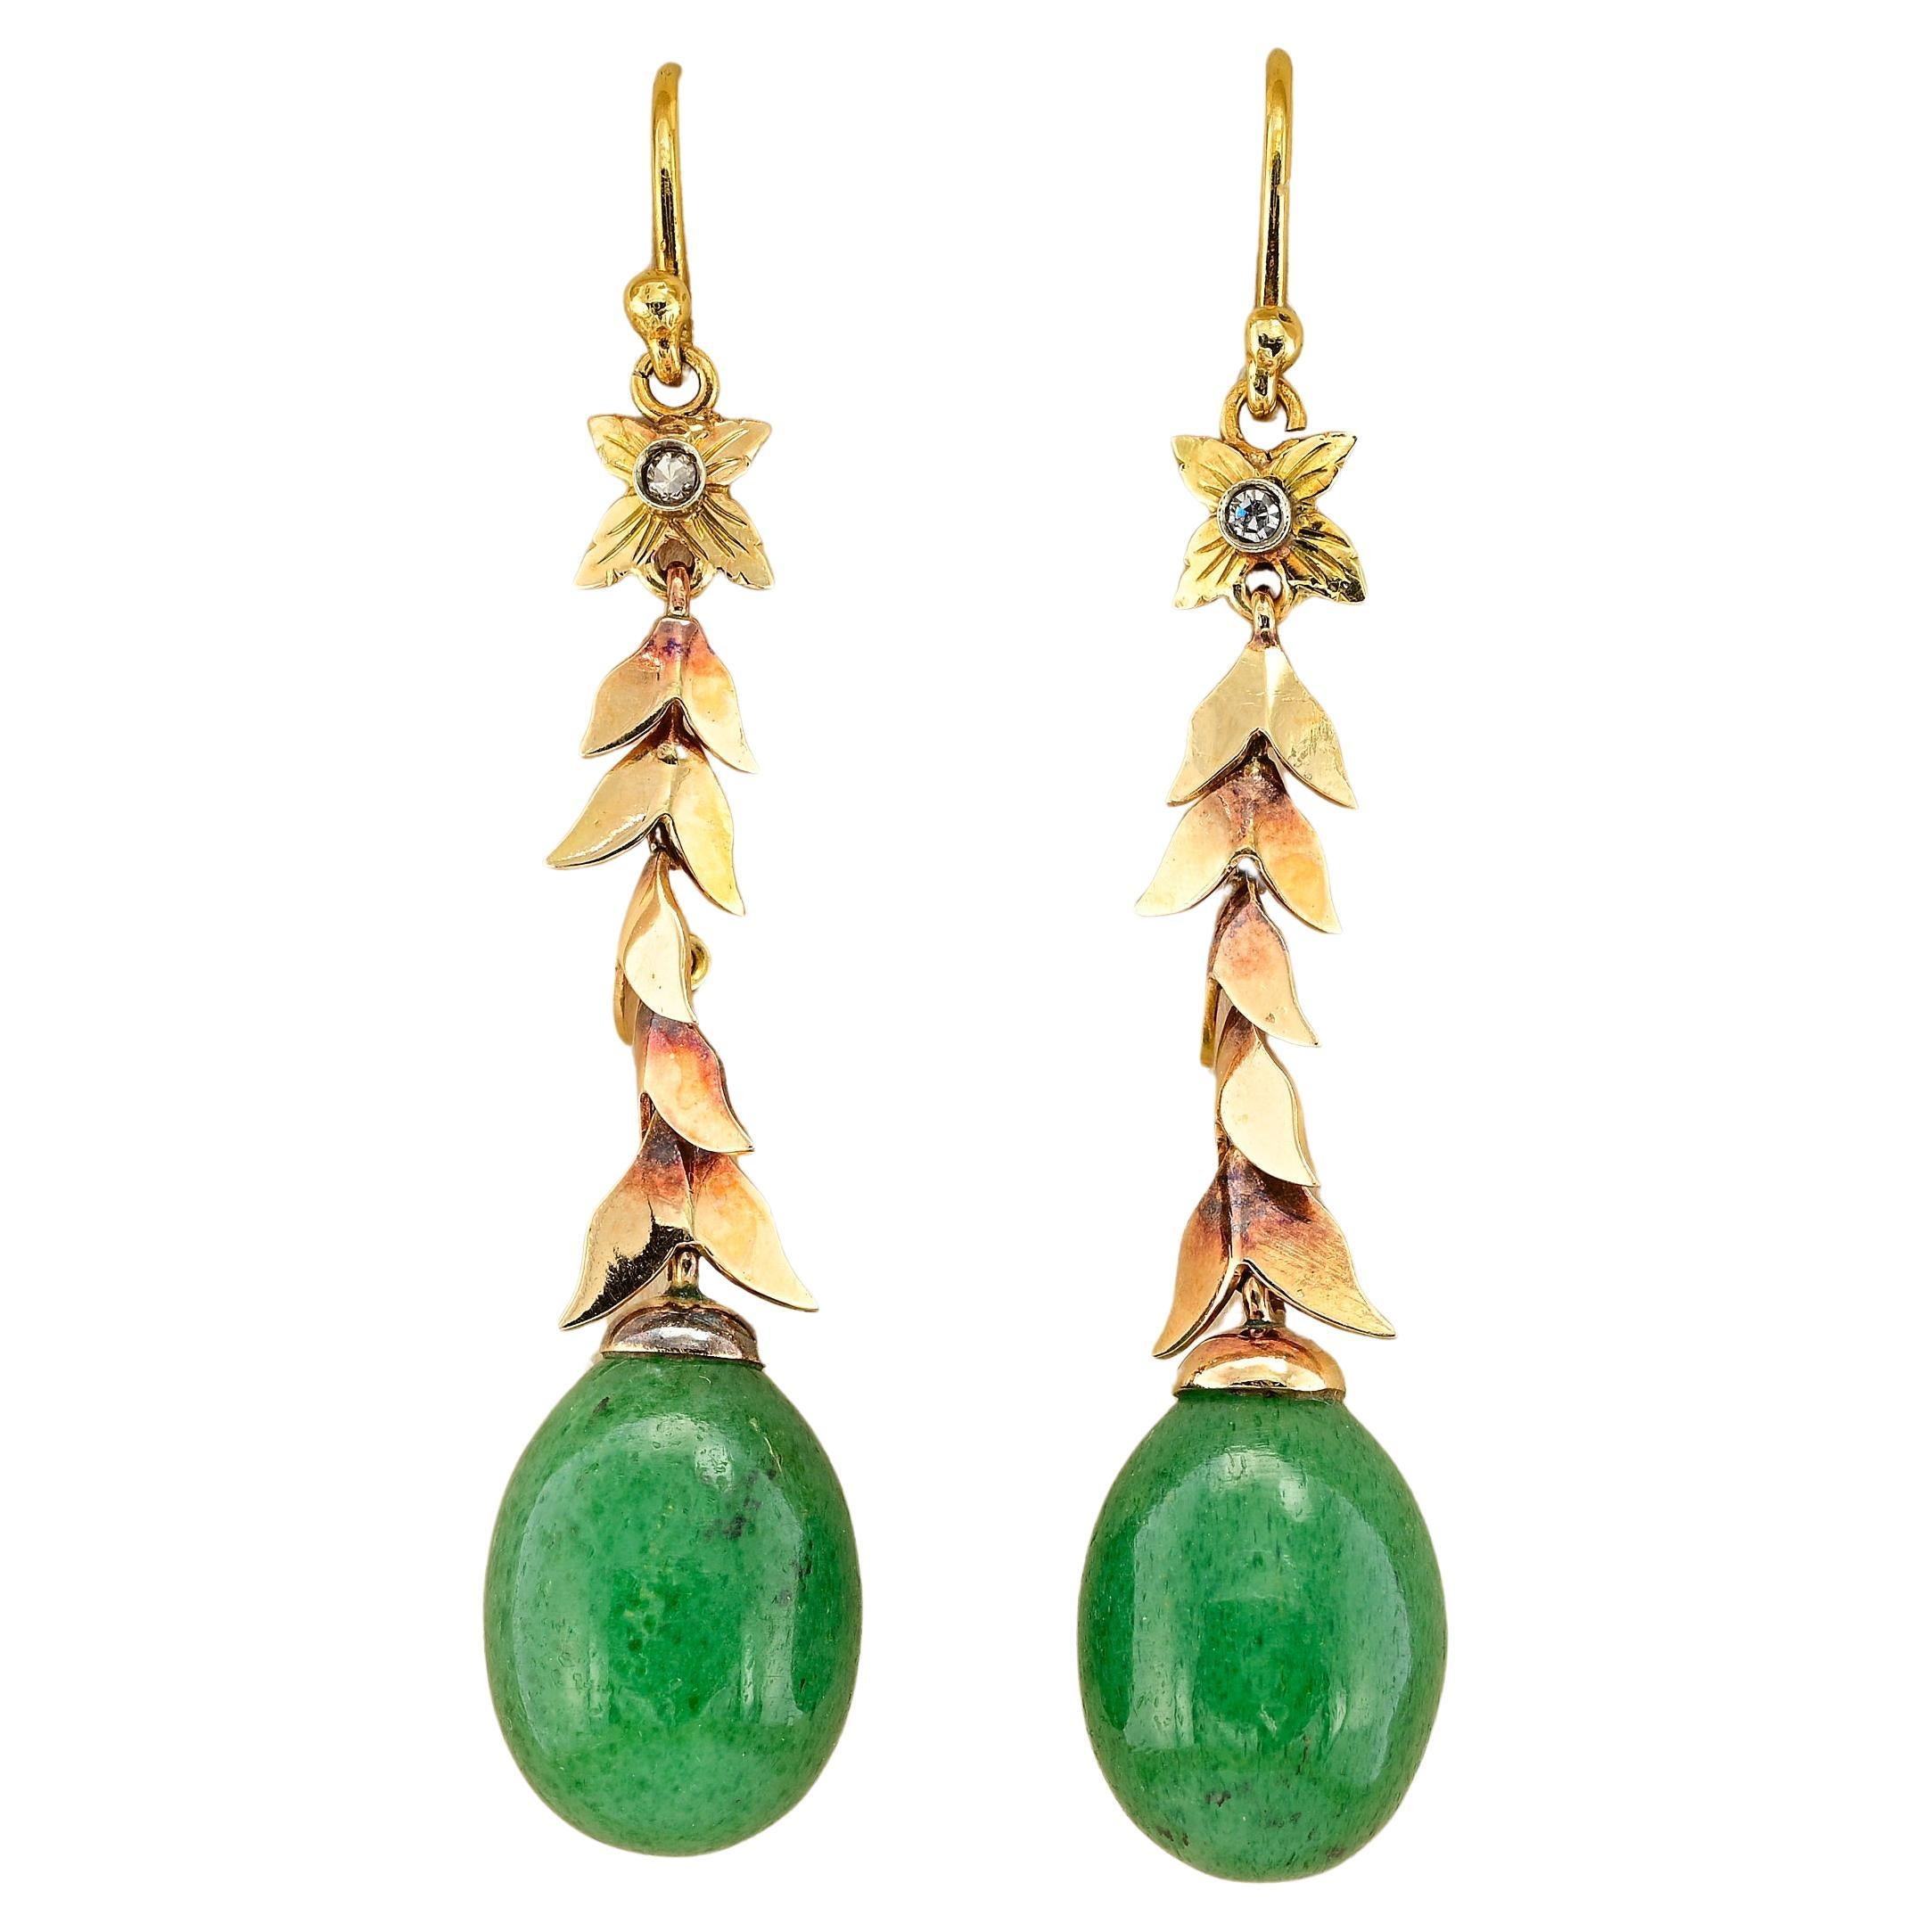 Vintage 32.0 Ct Green Aventurine Diamond Drop Earrings 18 KT